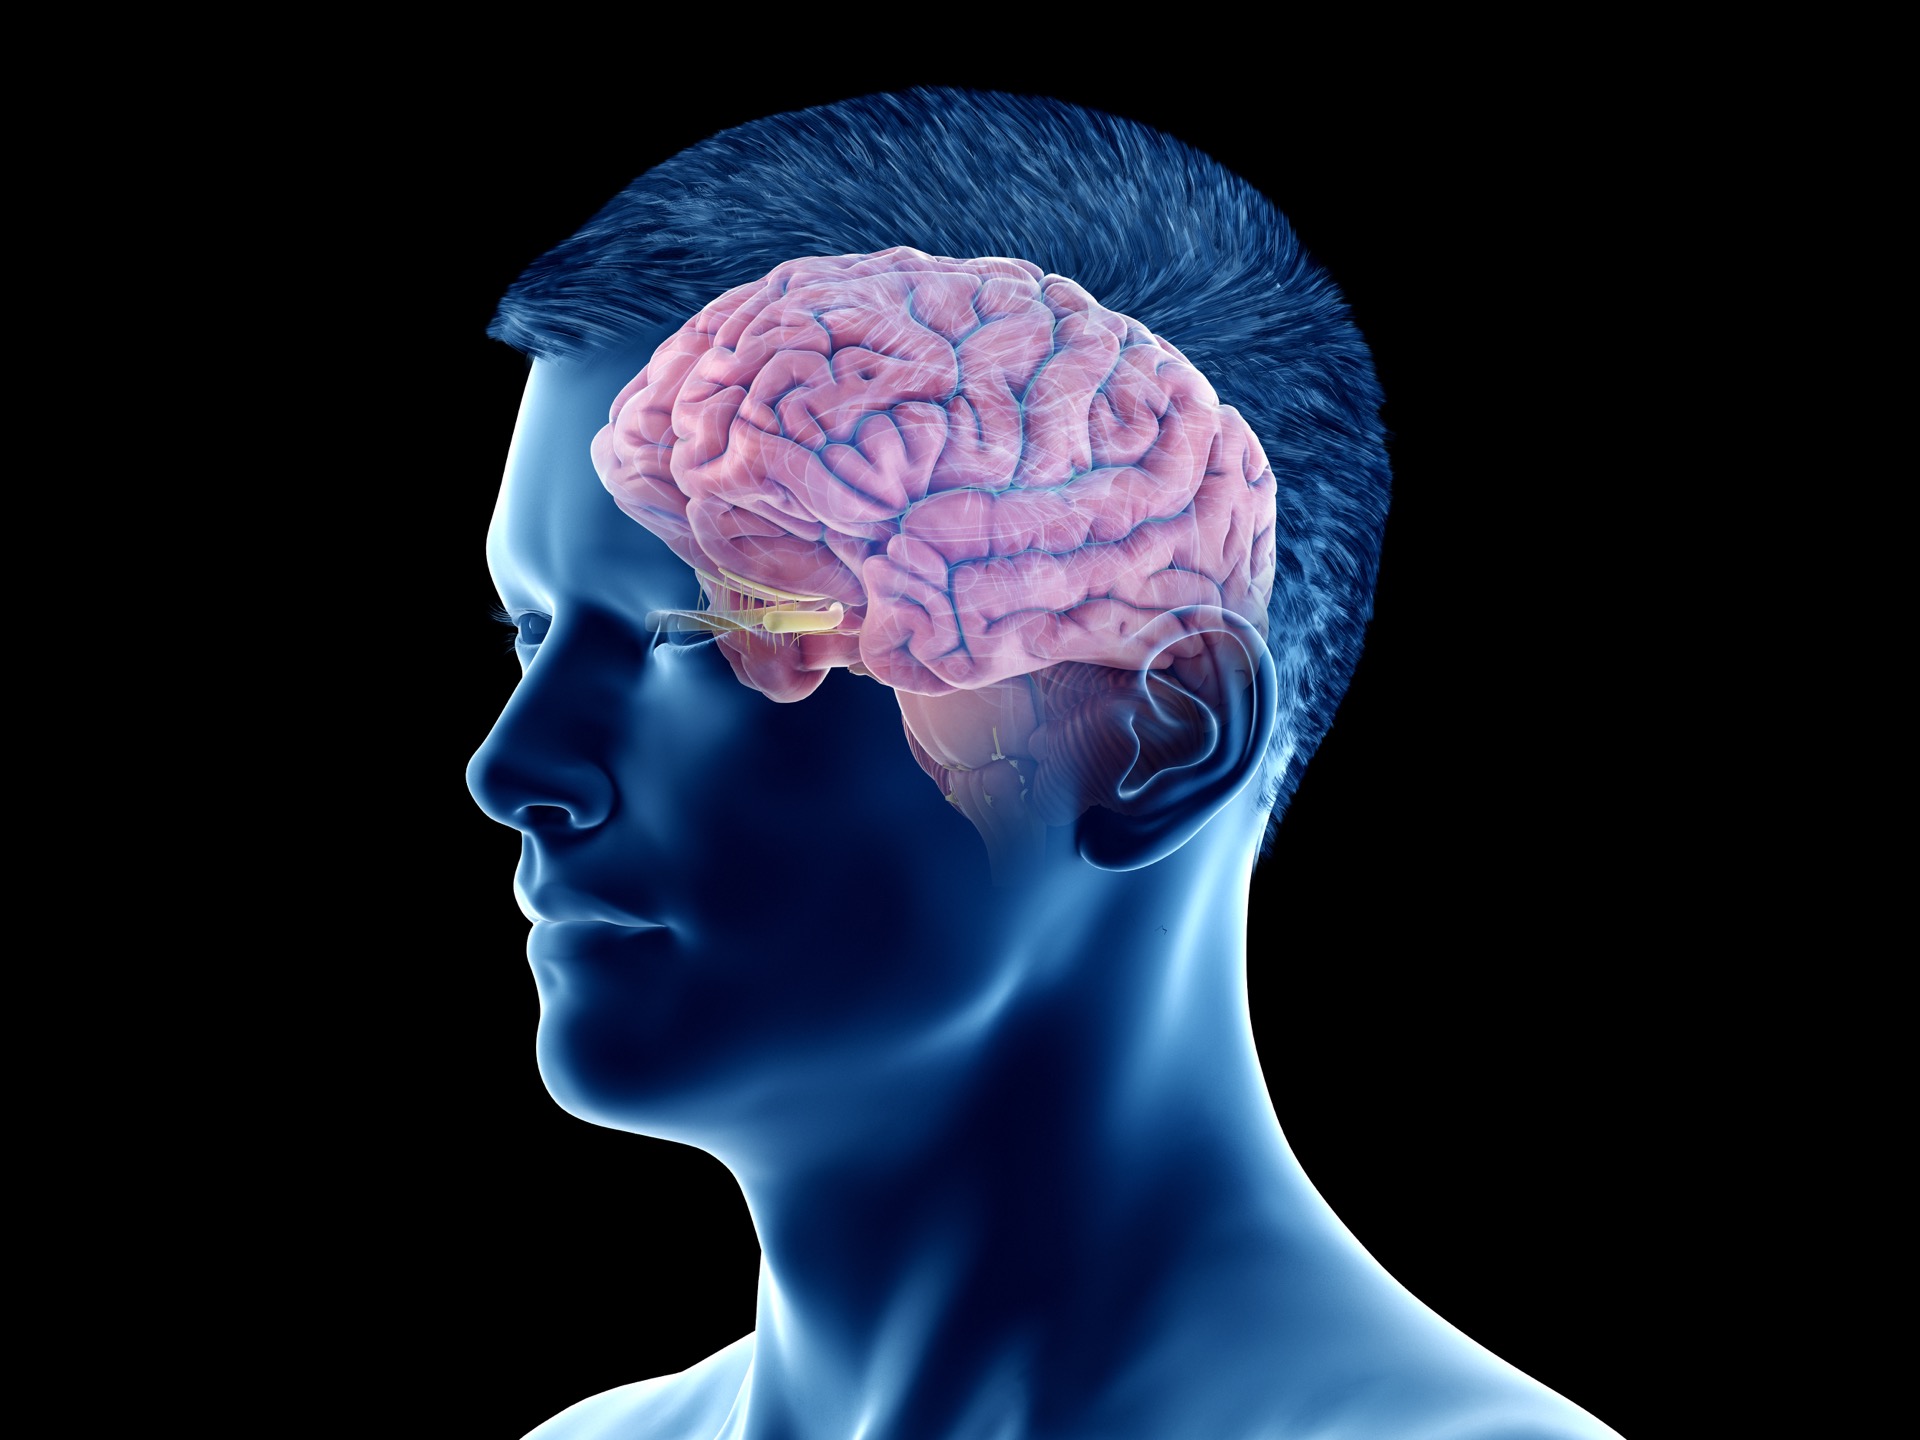 Le cortex préfrontal constitue la partie antérieure du lobe frontal. © Sebastian Kaulitzki, Adobe stock 